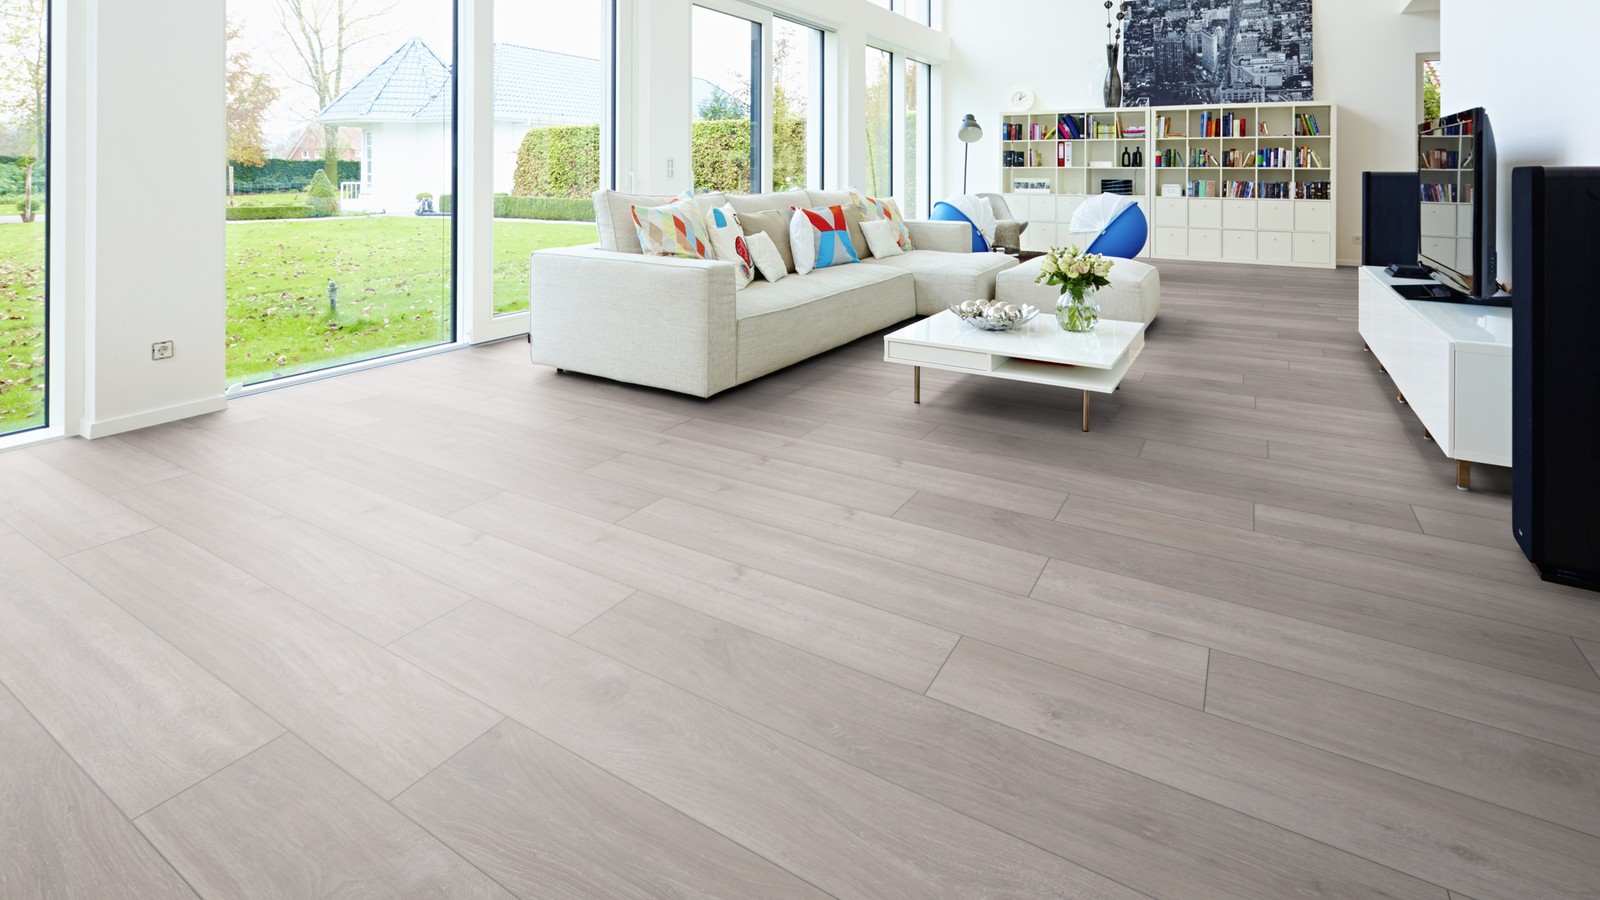 Quality Of Laminate Flooring, Laminate Wood Flooring Living Room